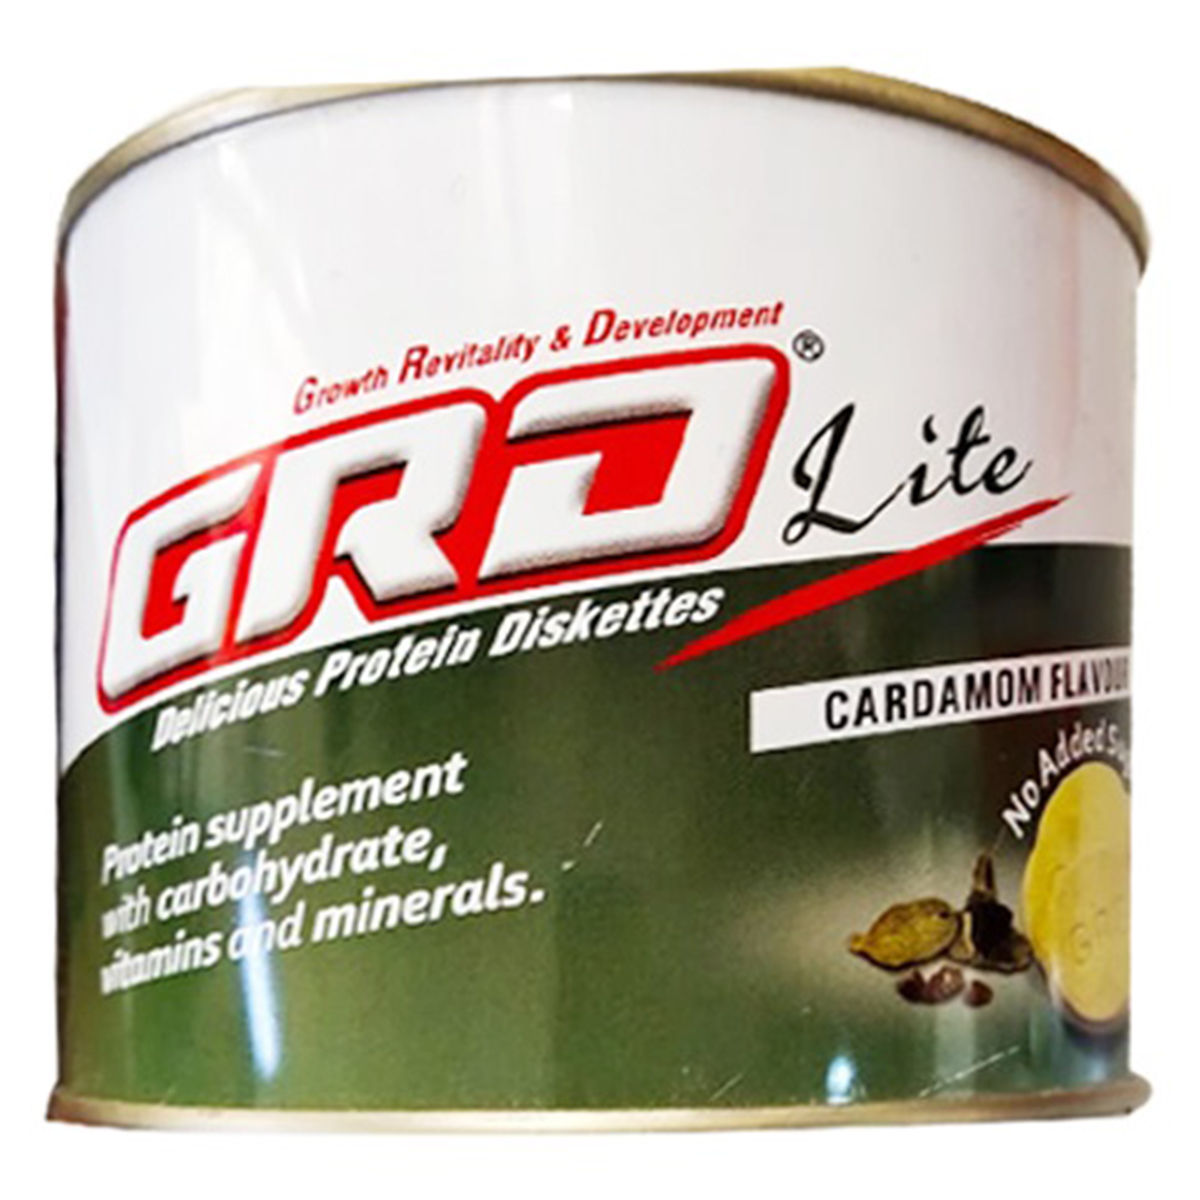 Buy GRD Lite Cardamom Flavour Diskettes, 250 gm Online